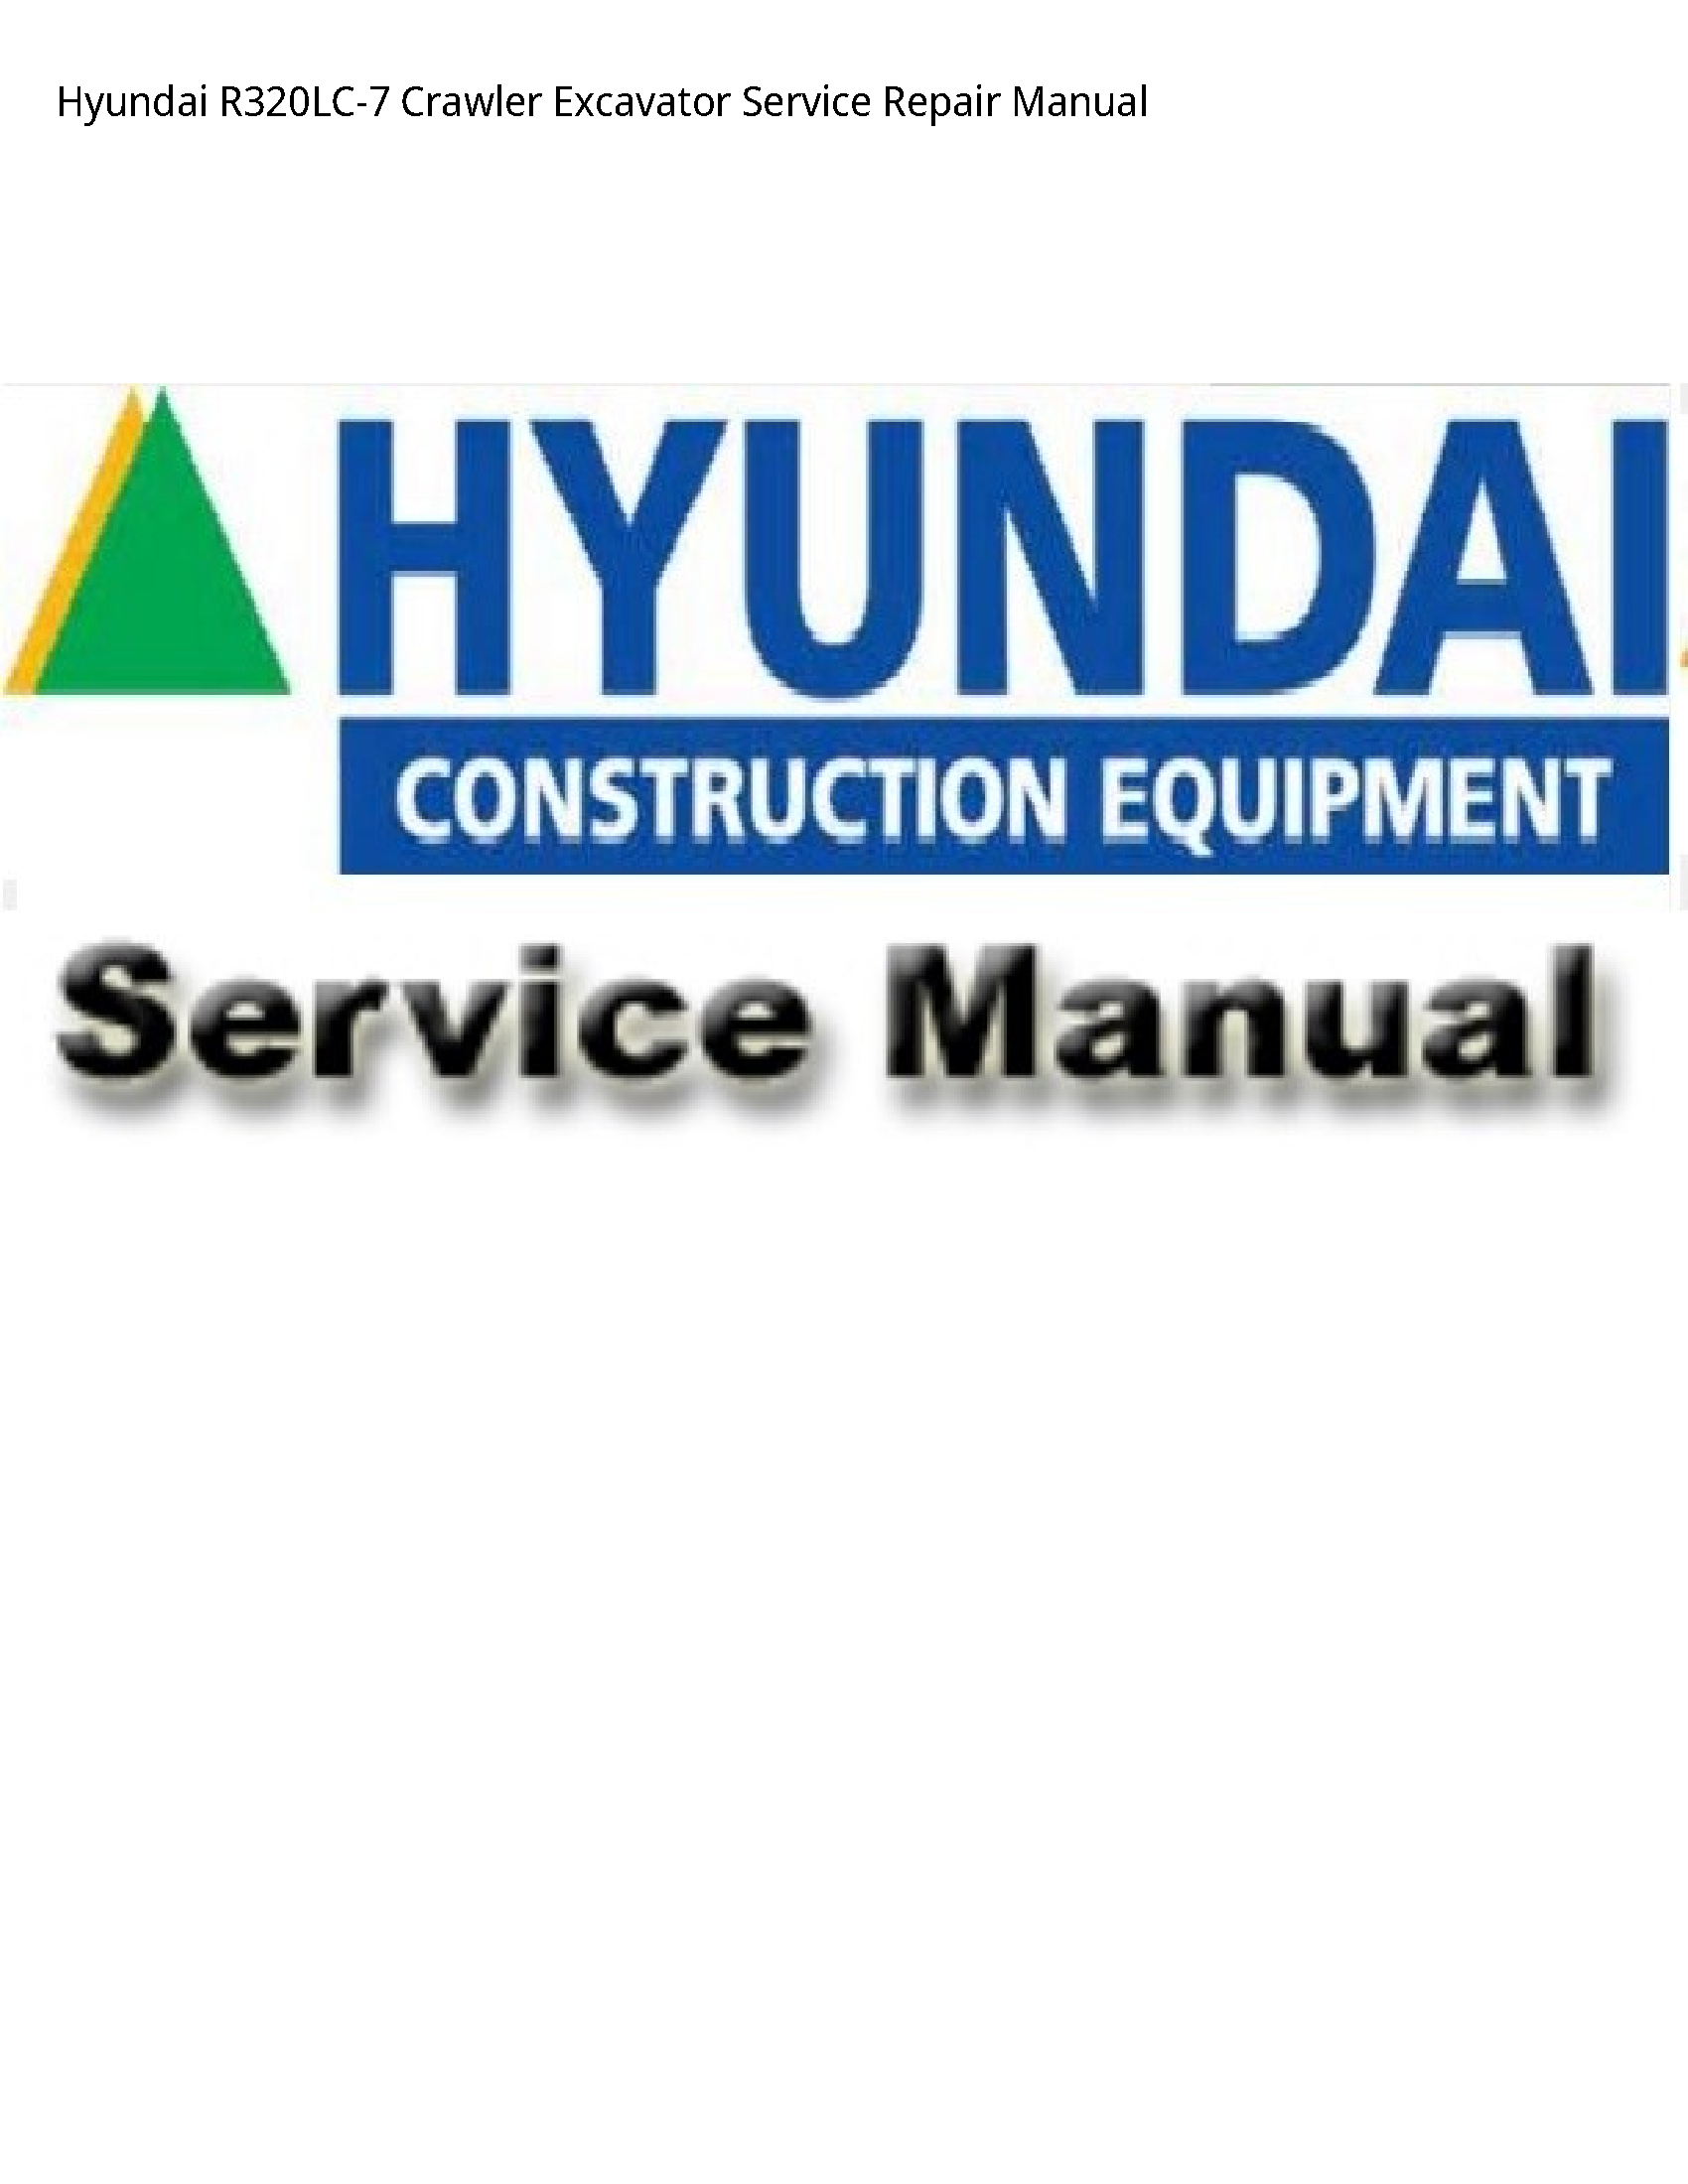 Hyundai R320LC-7 Crawler Excavator manual